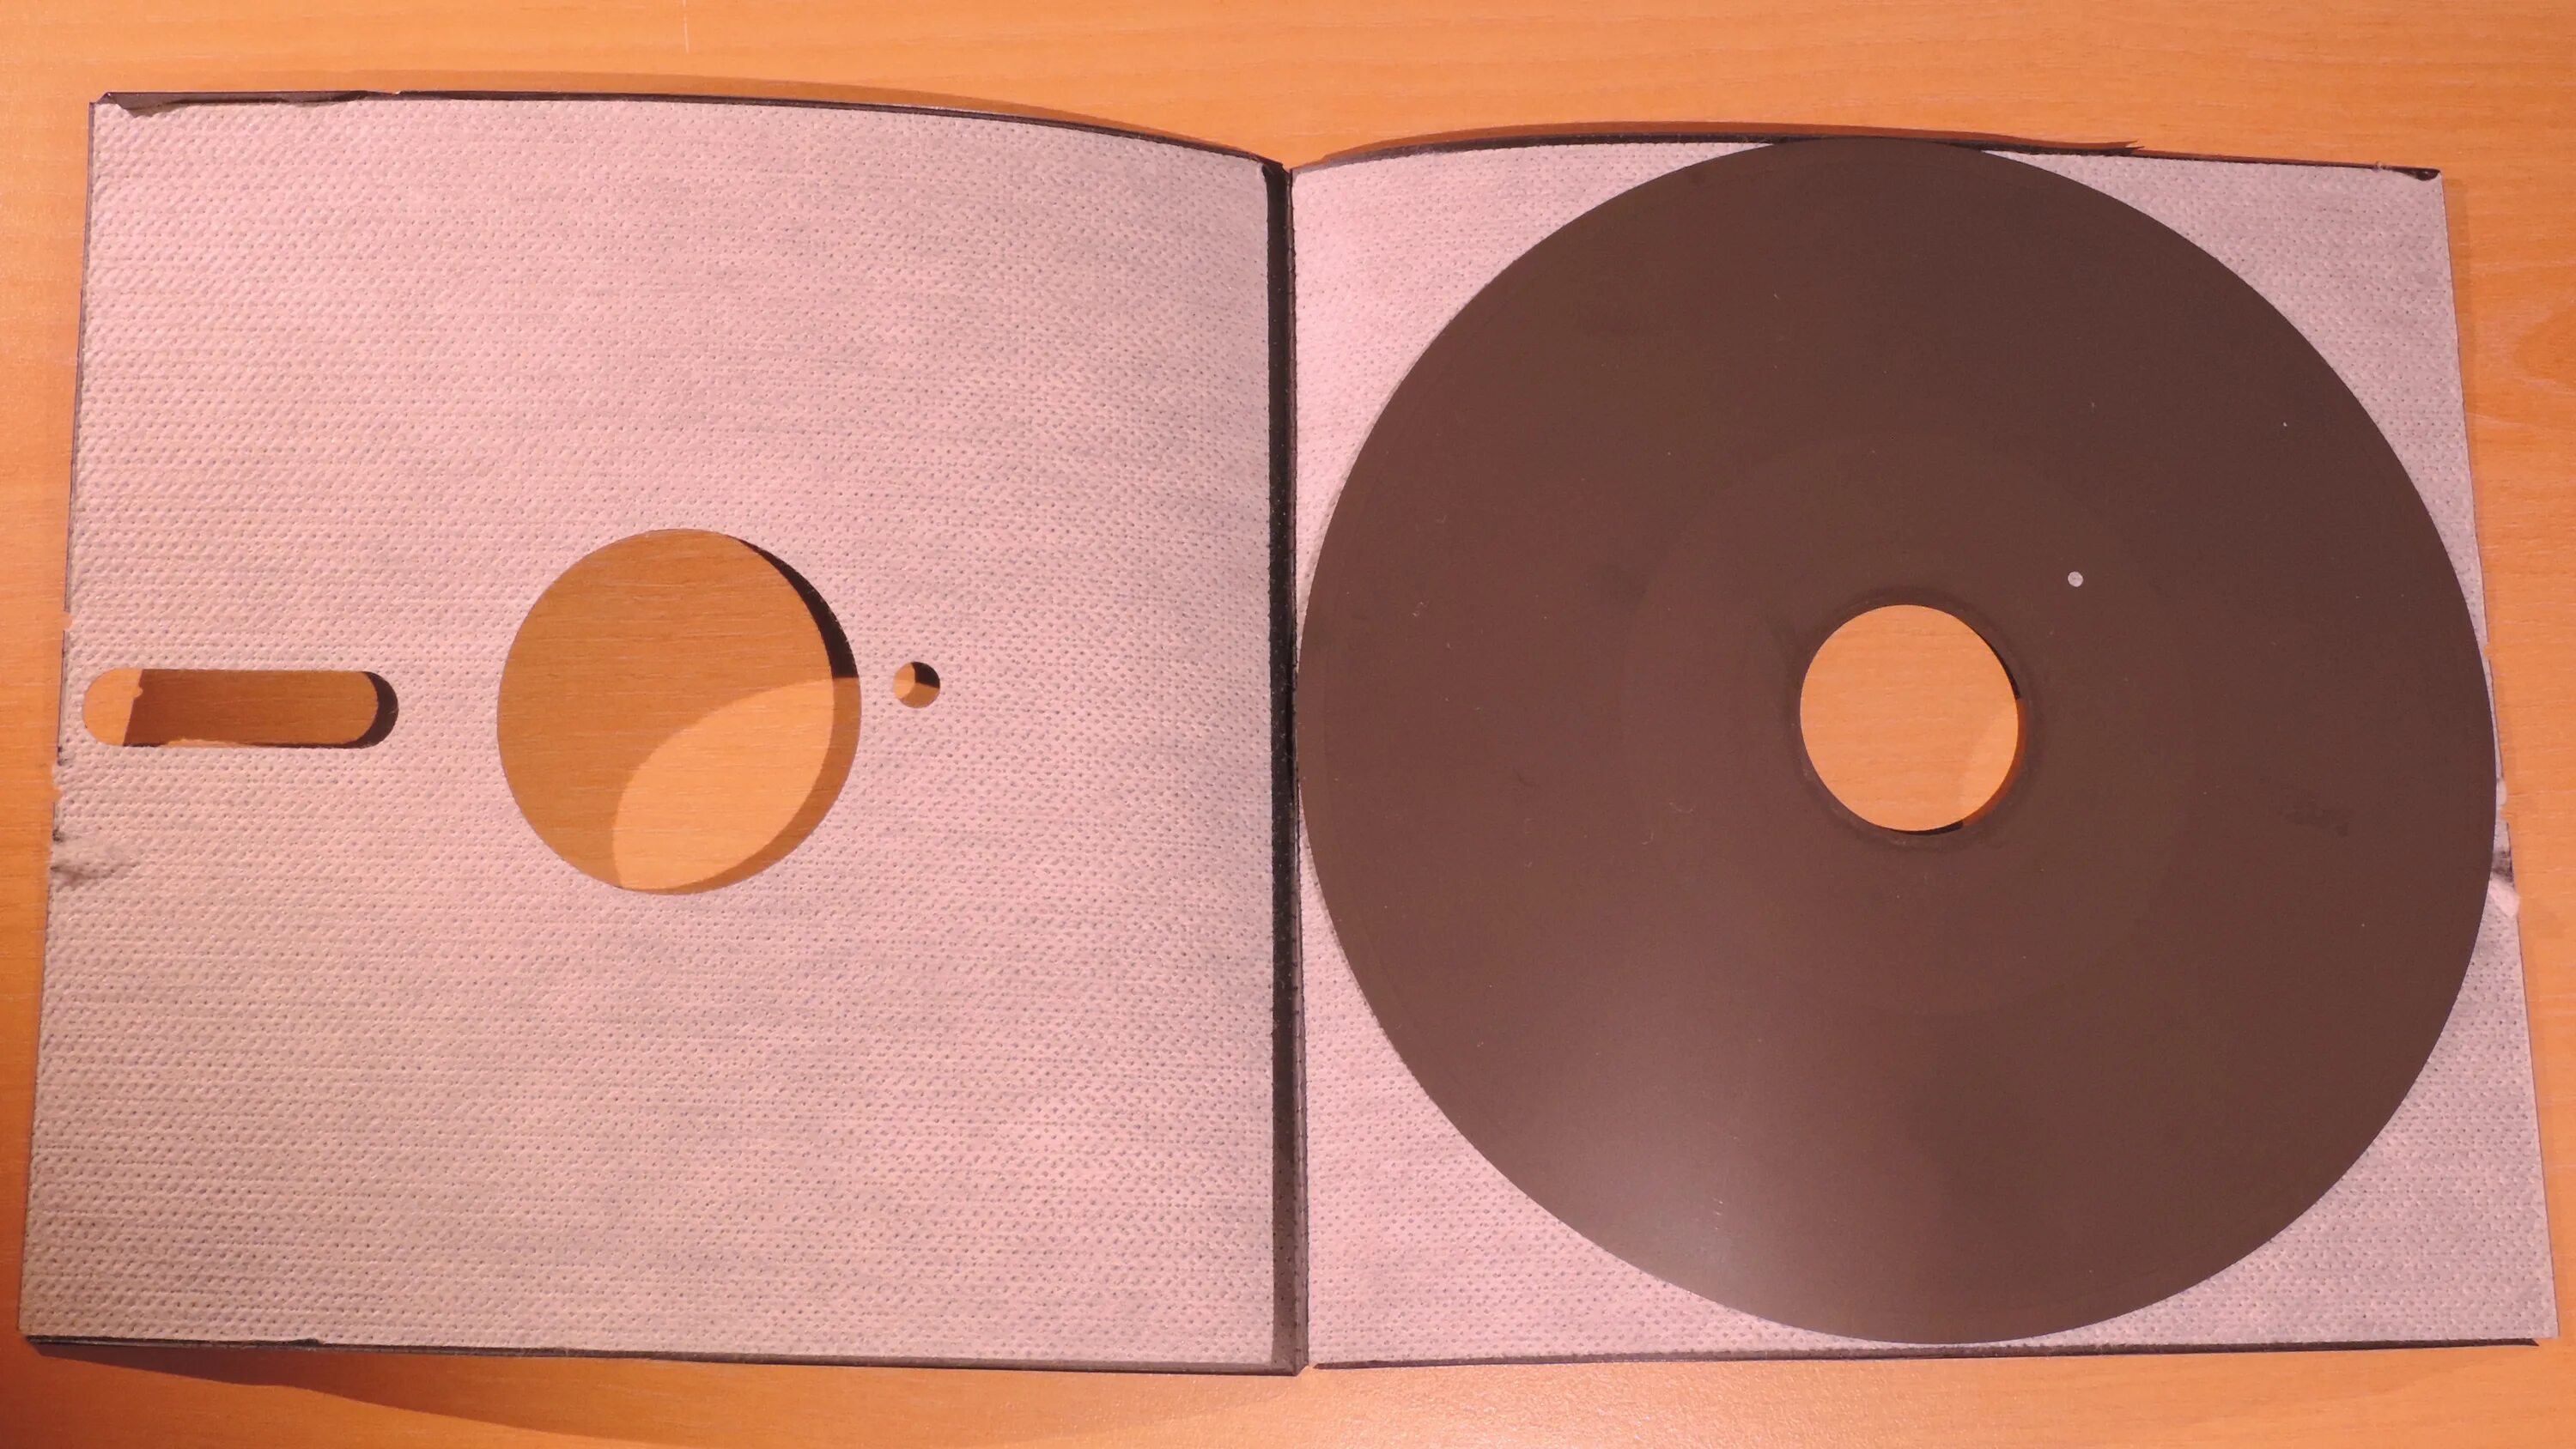 Дискета 8 дюймов. Флоппи-диск 5.25. Дискеты 8 дюймов 5,25 дюймов. Флоппи диск 8 дюймов. Объем диска 5.25